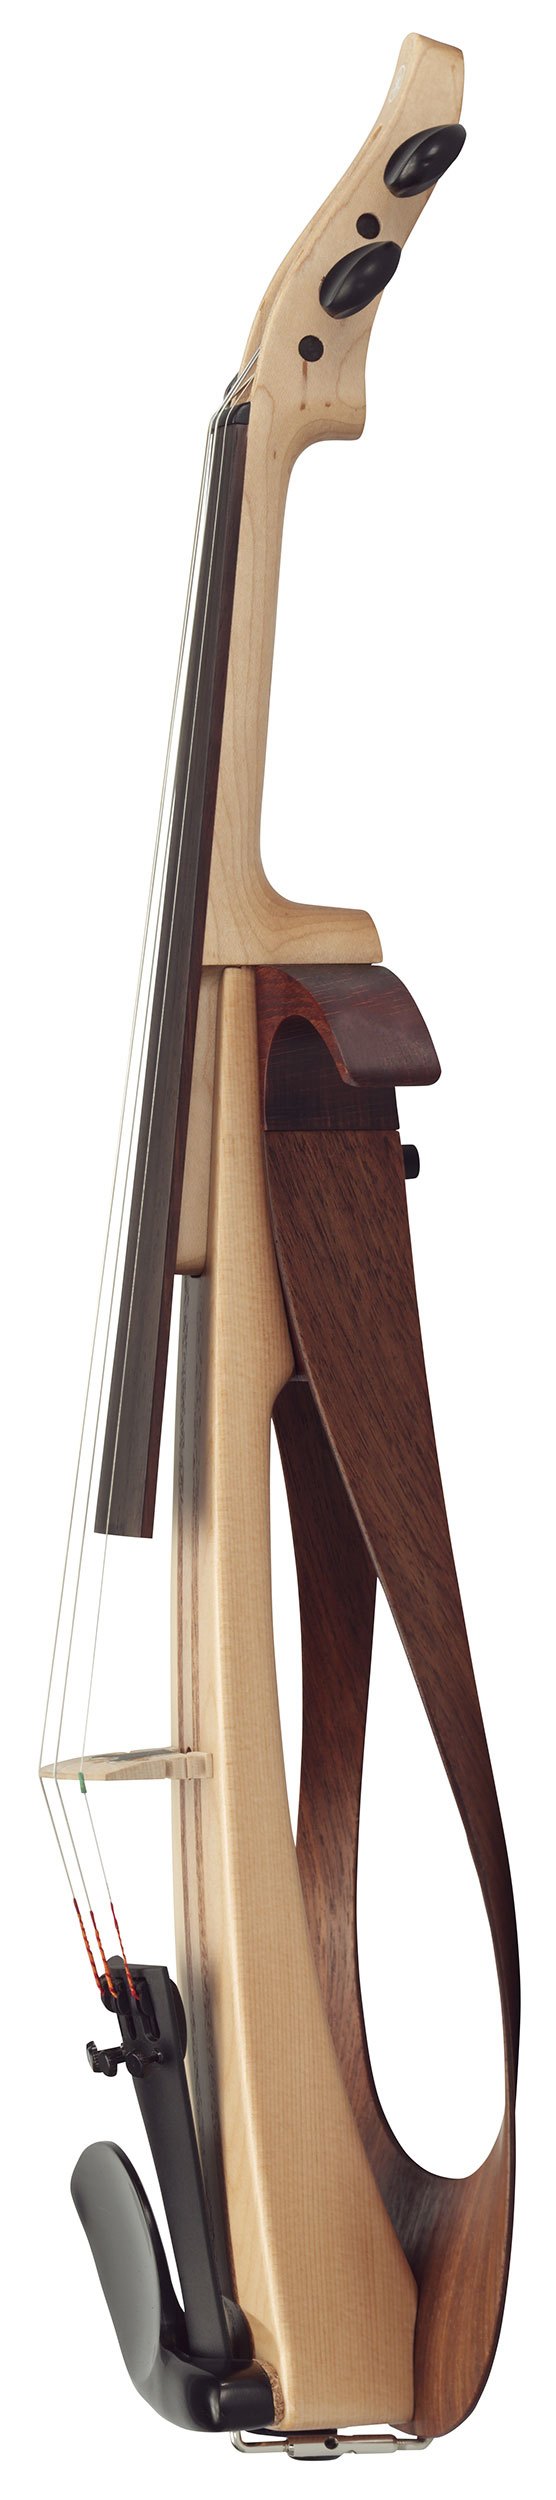 Yamaha YEV105 Electric 5-Strings Violin (various colors)